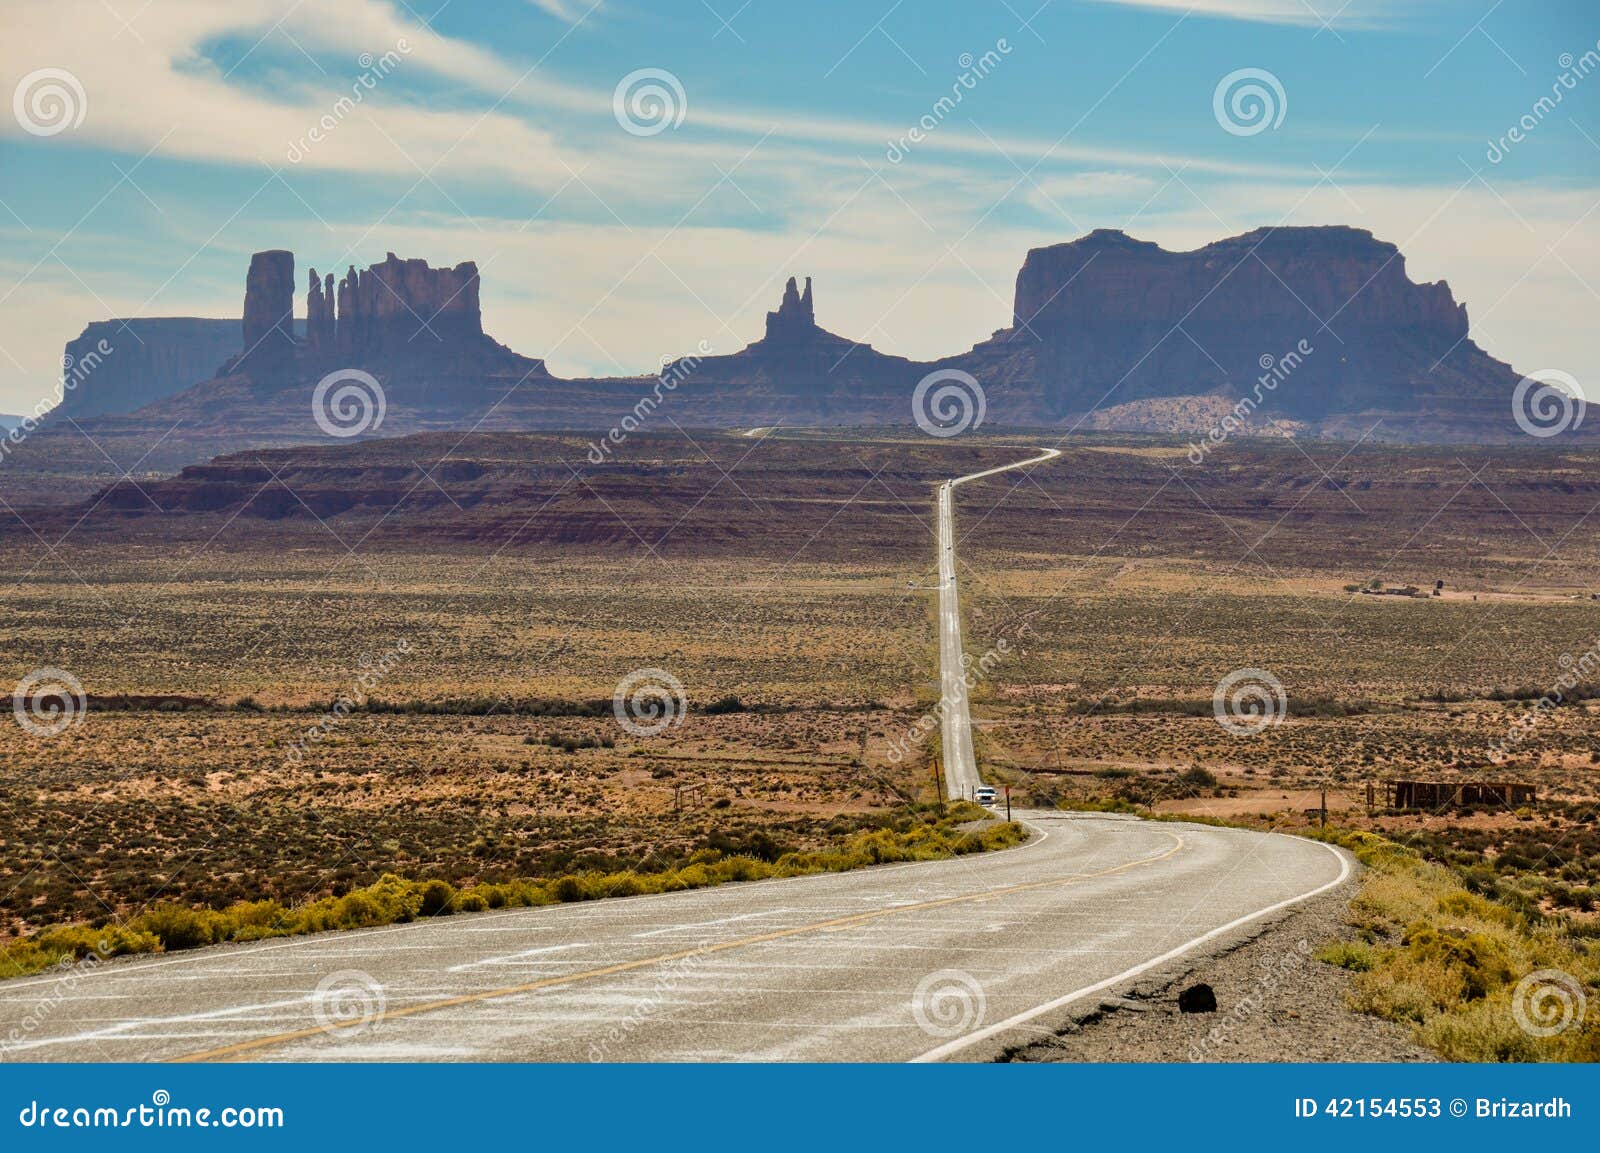 road trip to monument valley, arizona, usa